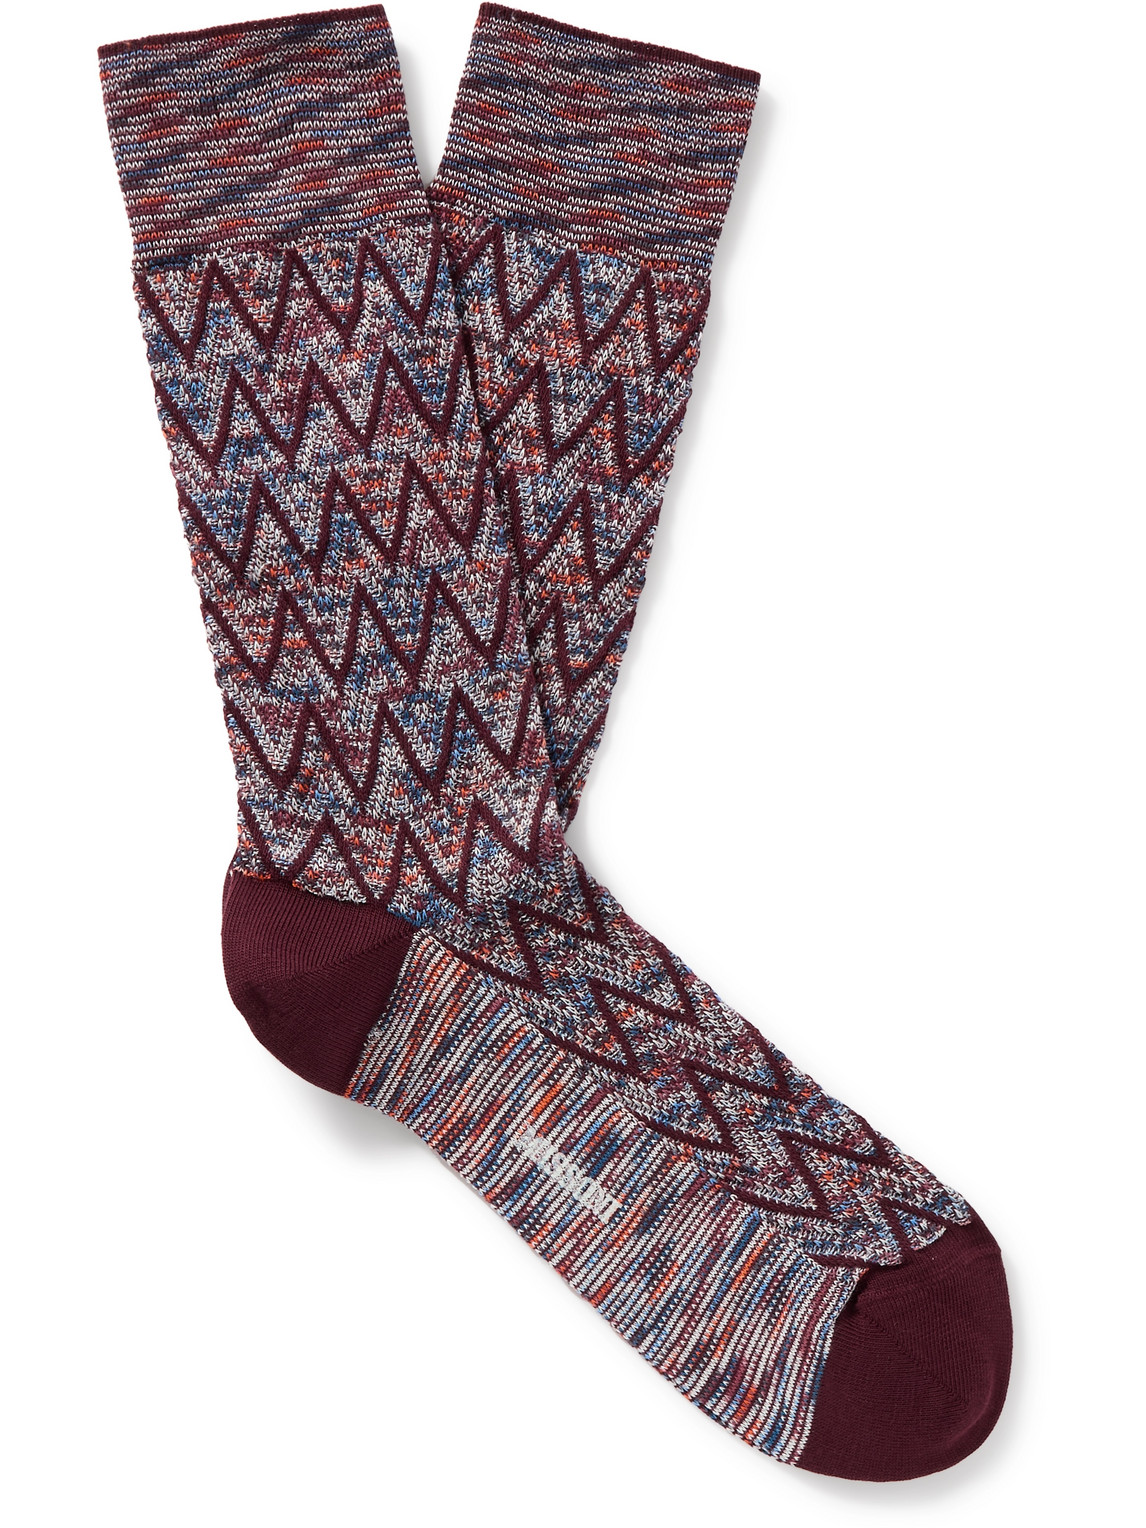 Missoni - Striped Crocheted Cotton-Blend Socks - Men - Burgundy - M von Missoni